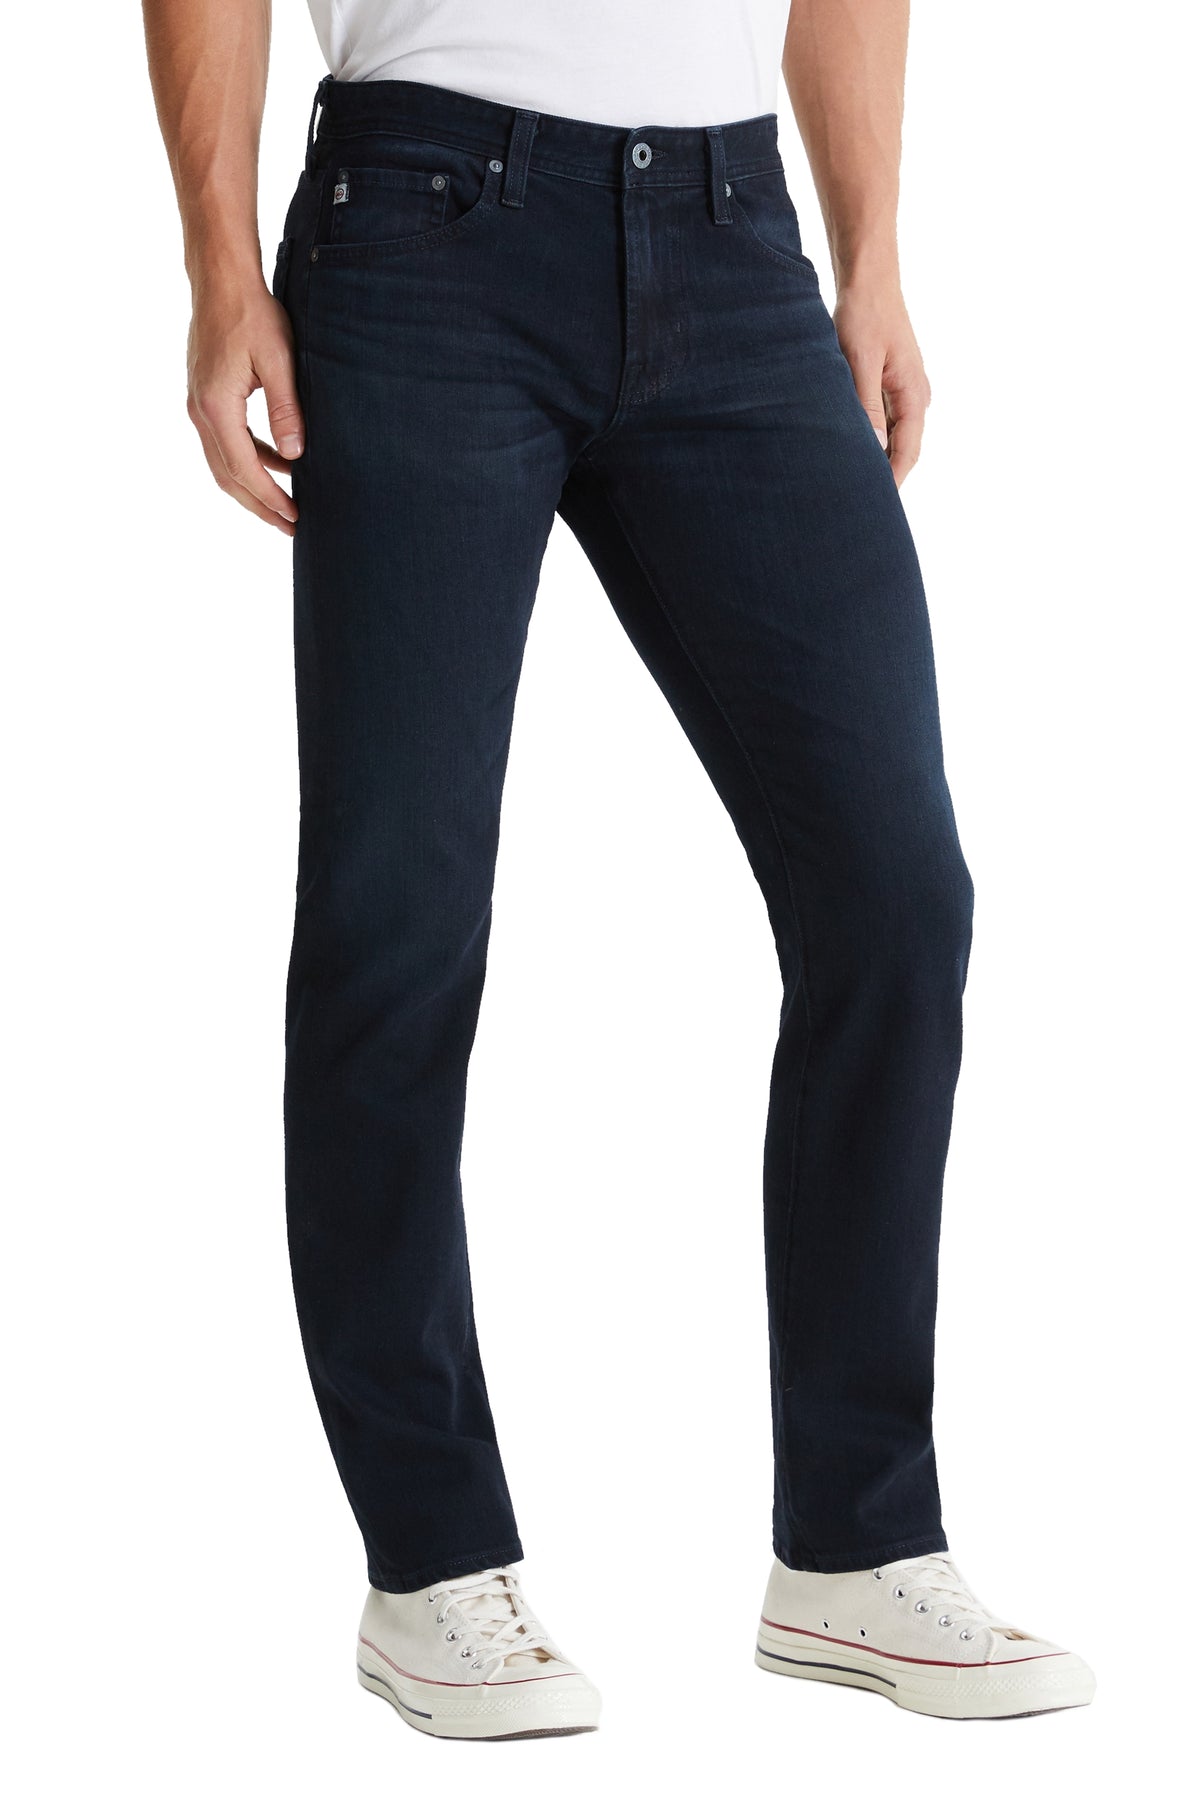 MAC Flexx Superstretch Soft – Seattle Brushed Company Jeans Thread Denim